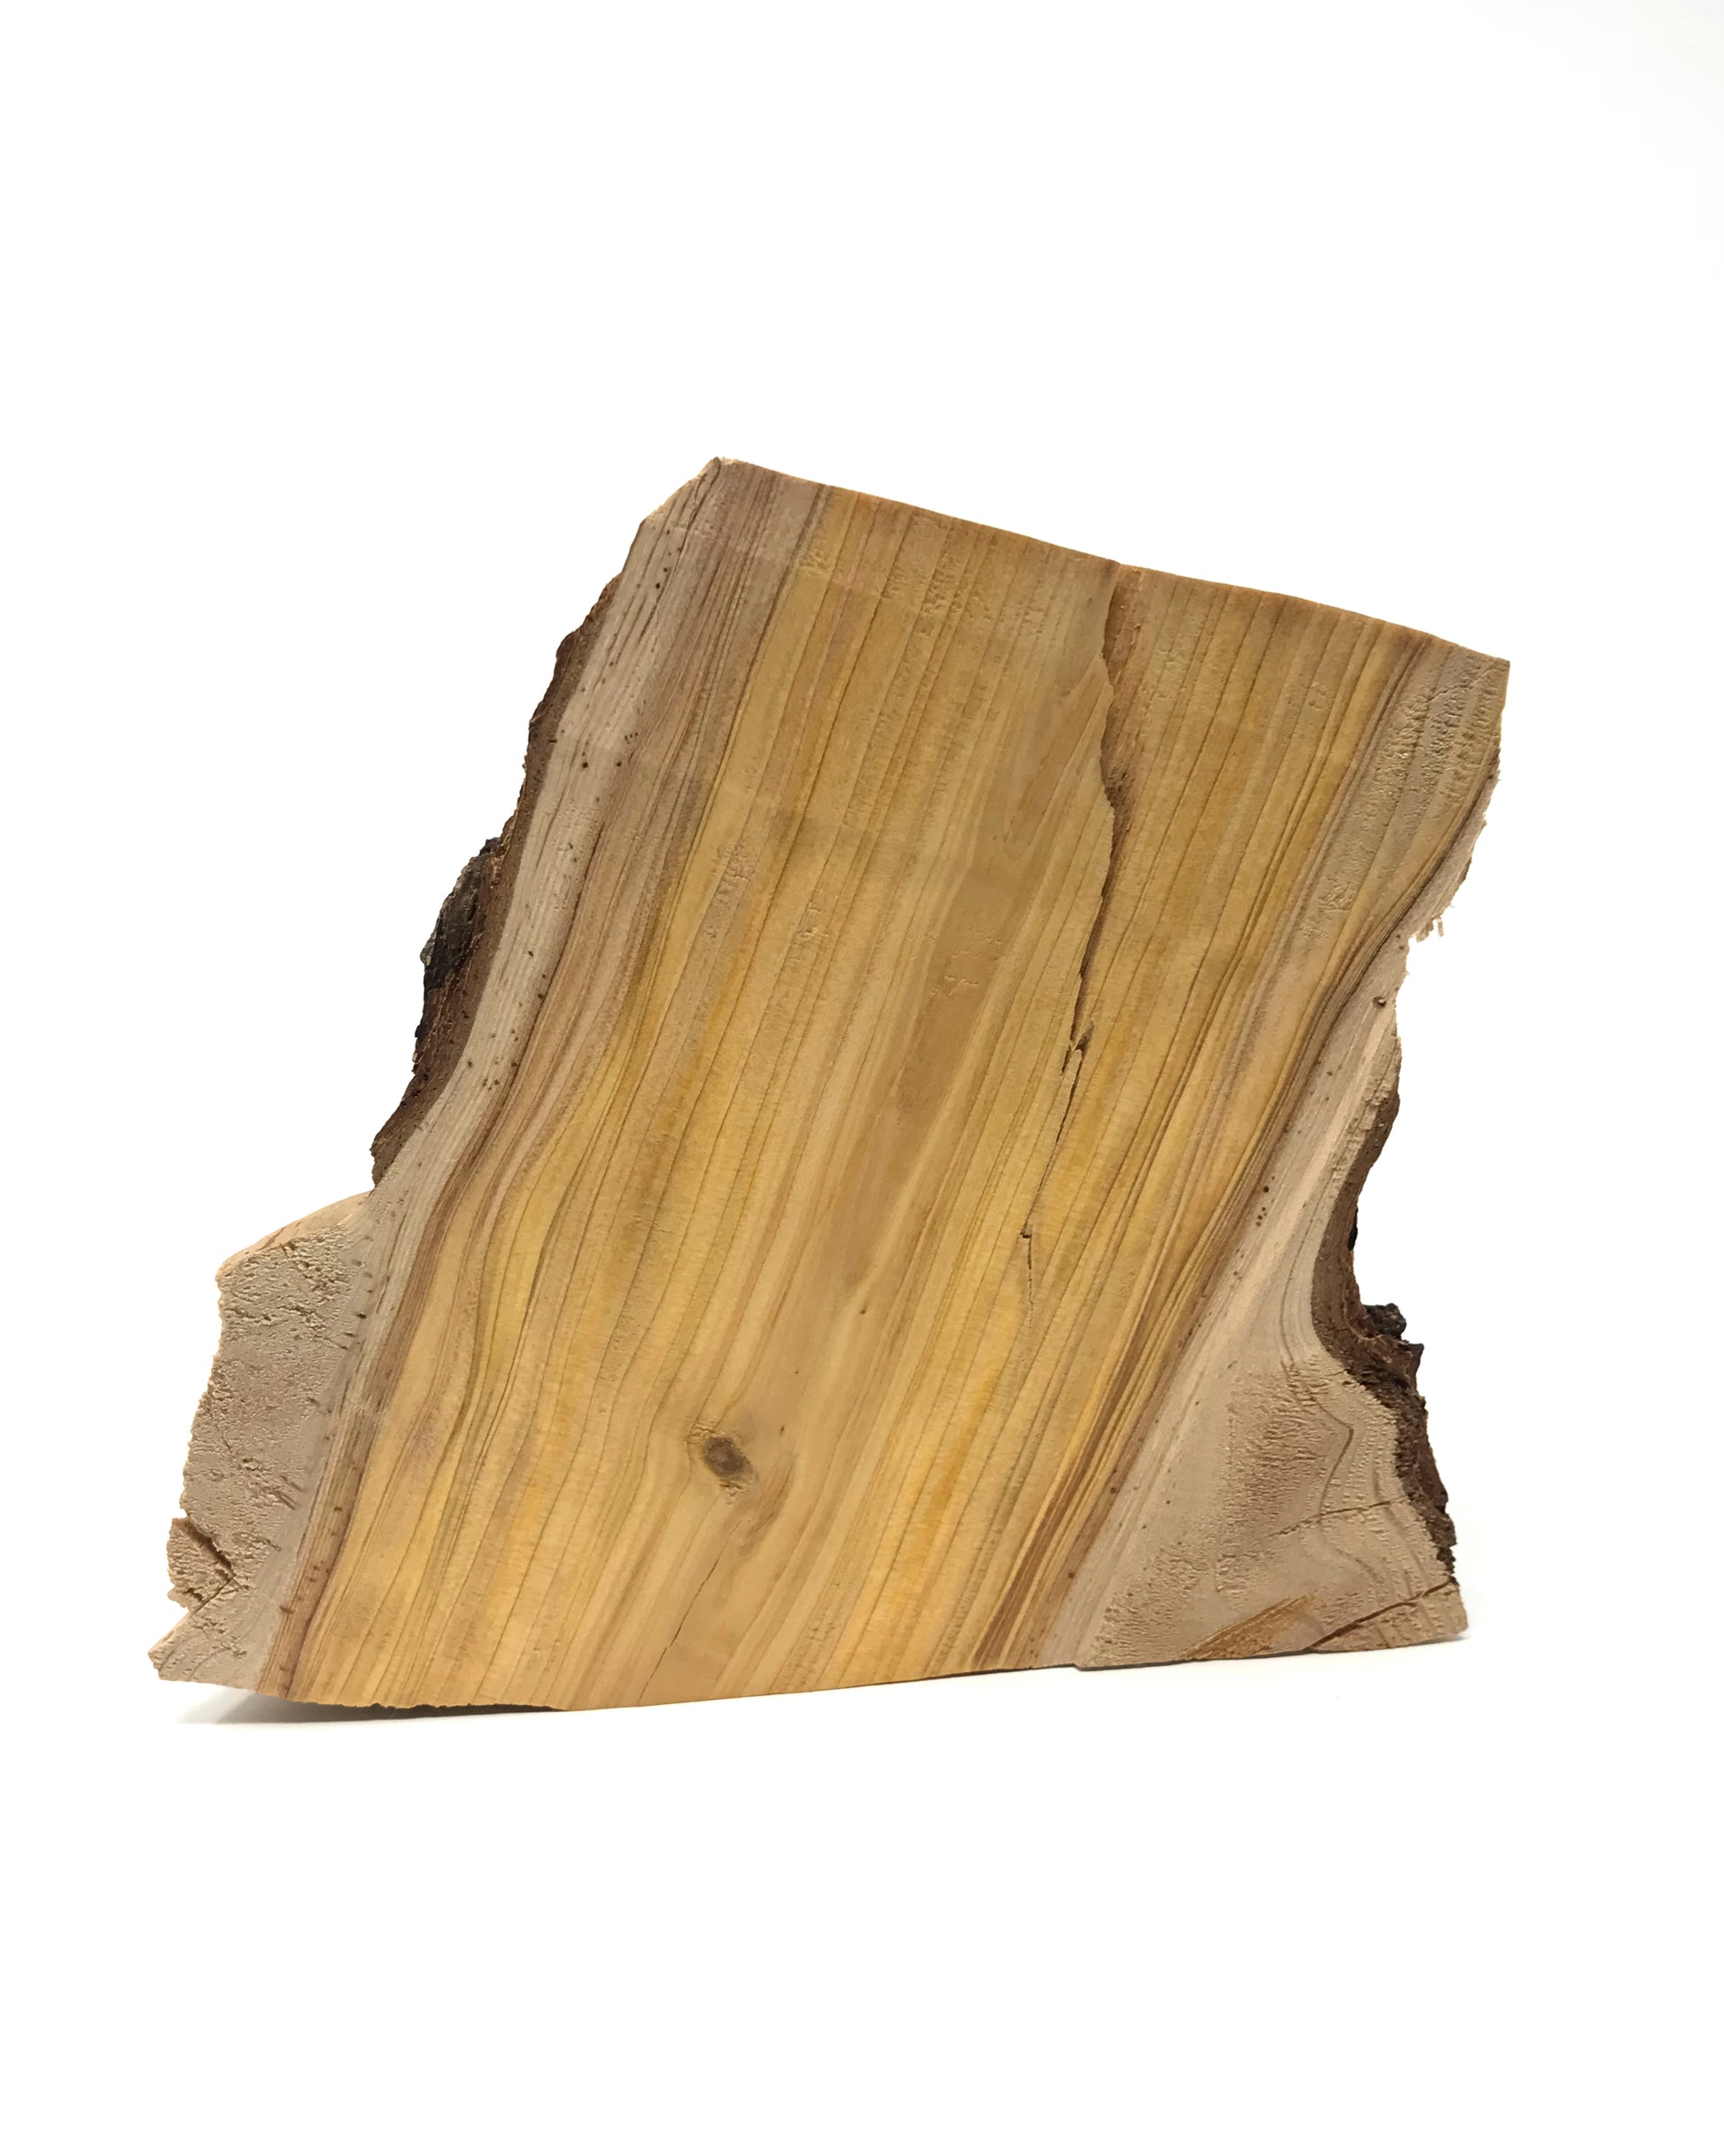 gara skincare cedar wood trunk close up